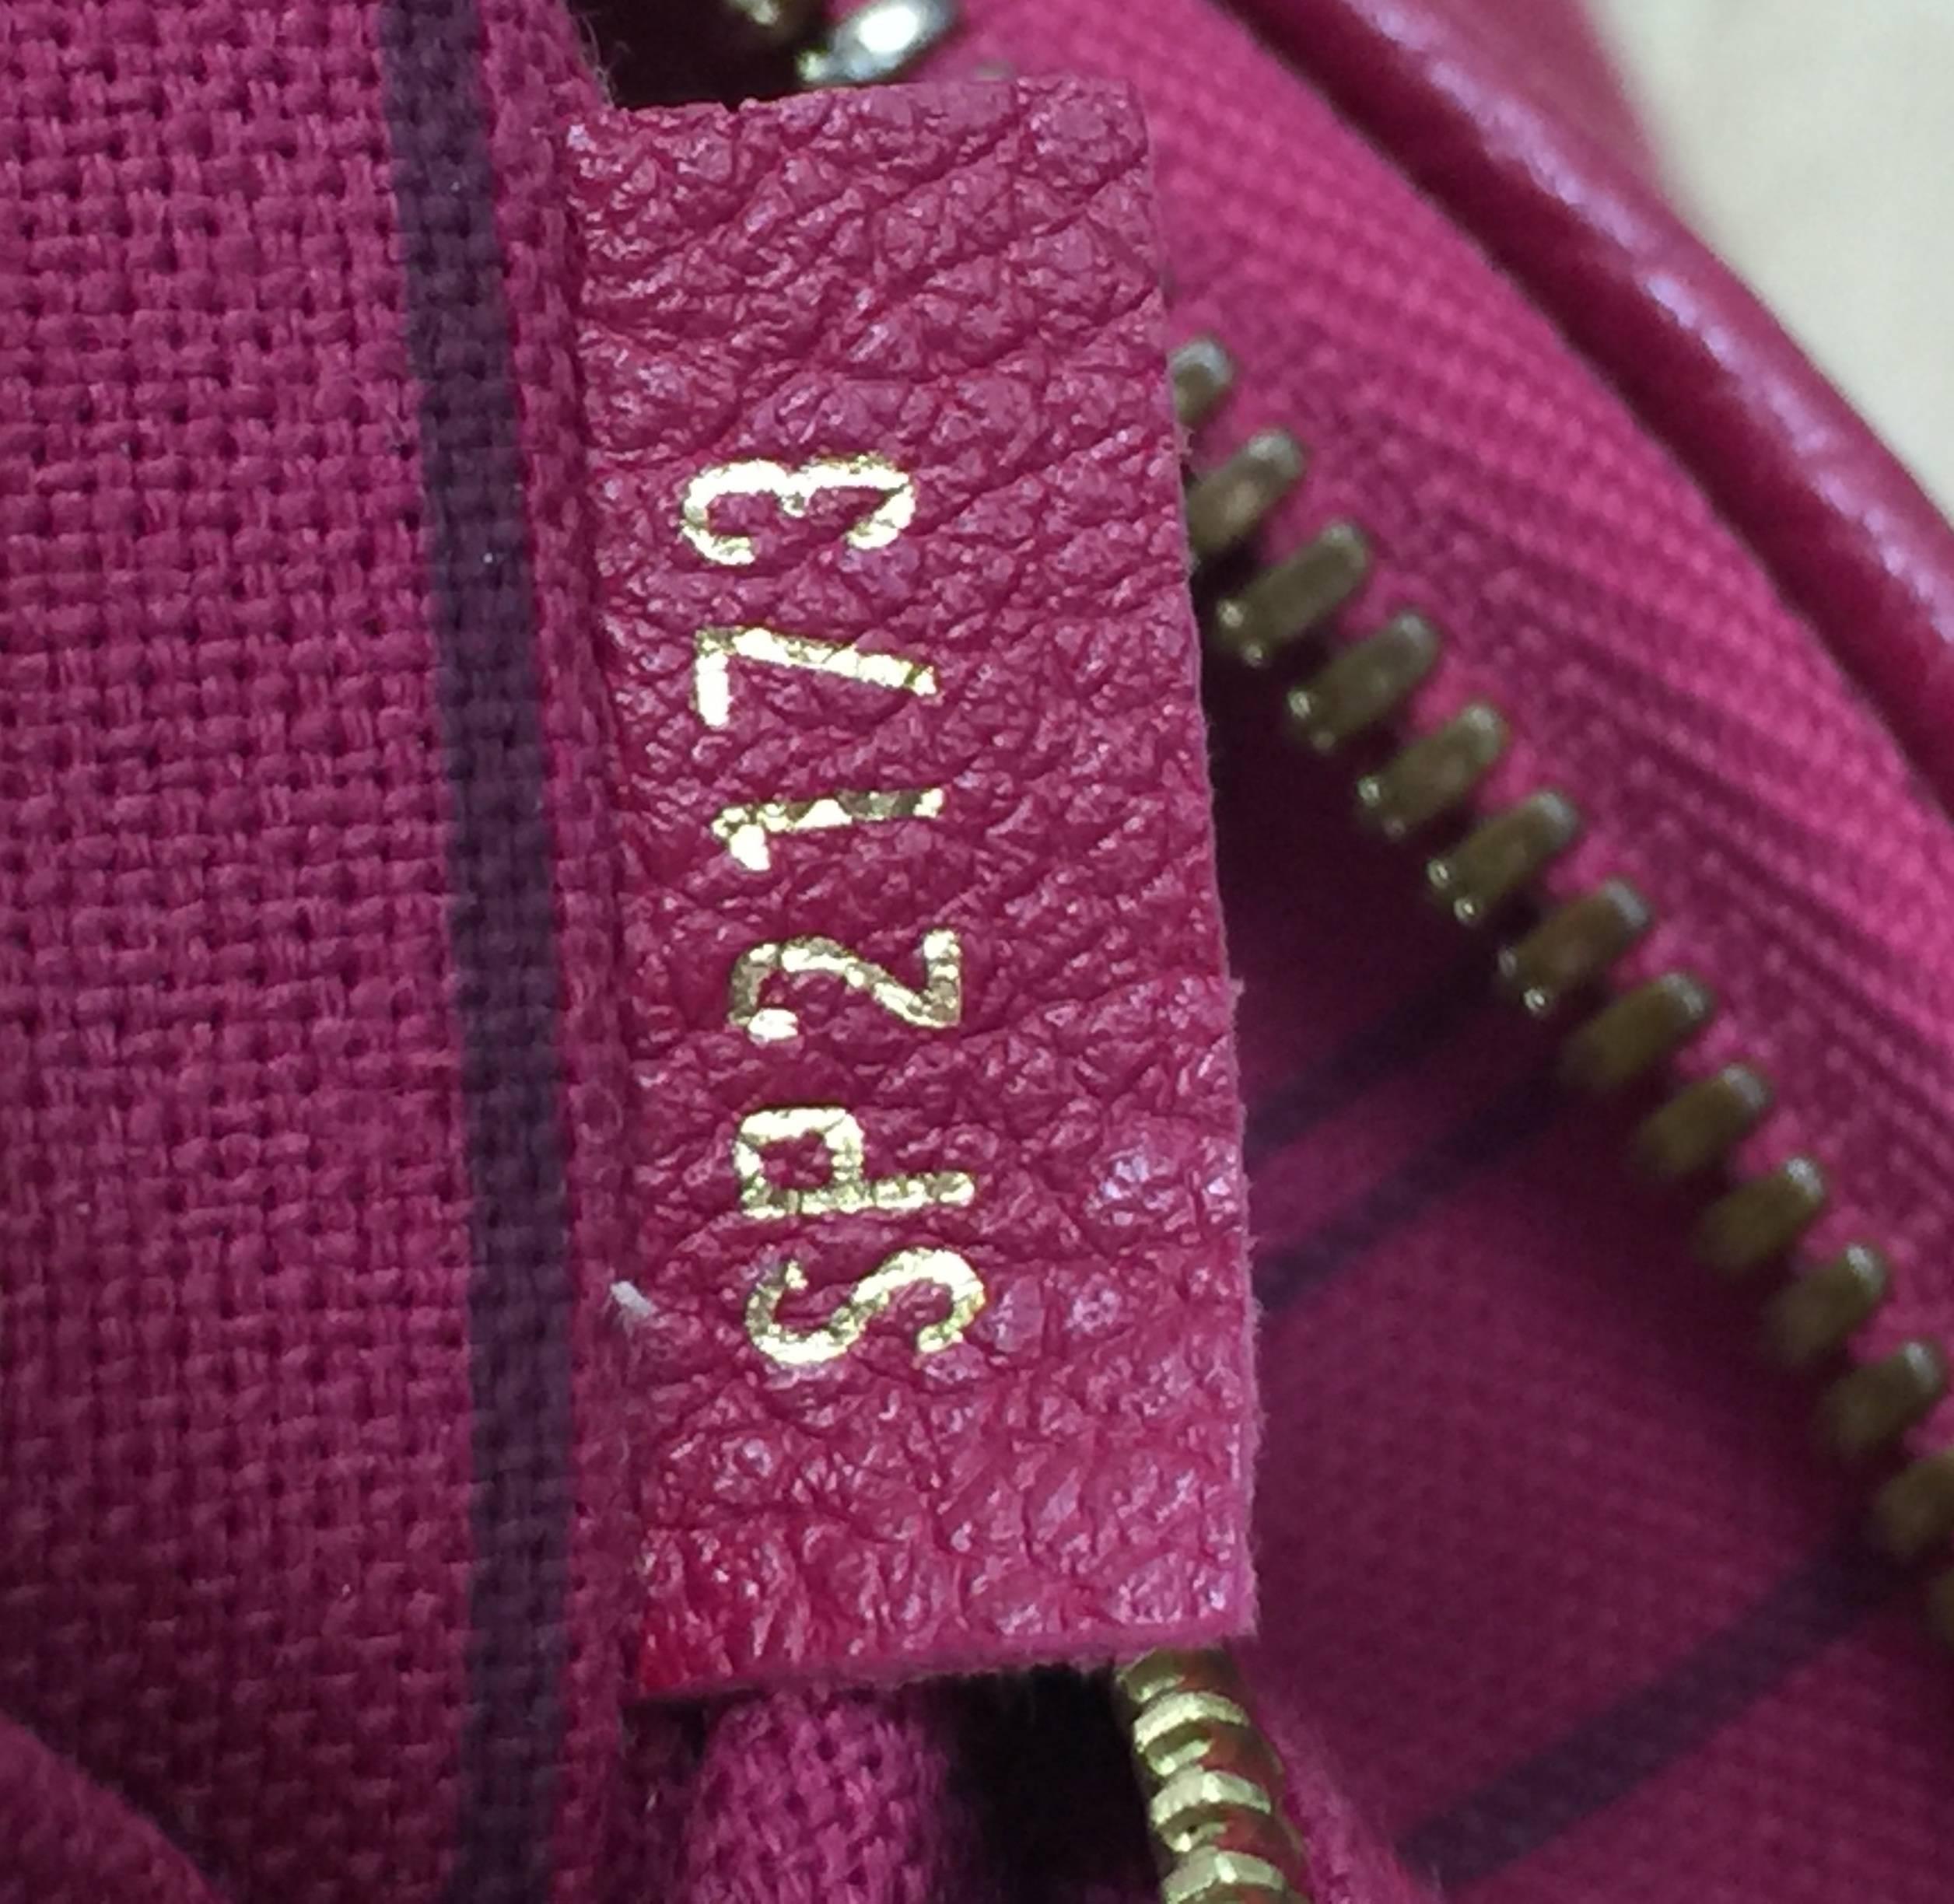 Louis Vuitton Speedy Bandouliere Bag Monogram Empreinte Leather 25 2